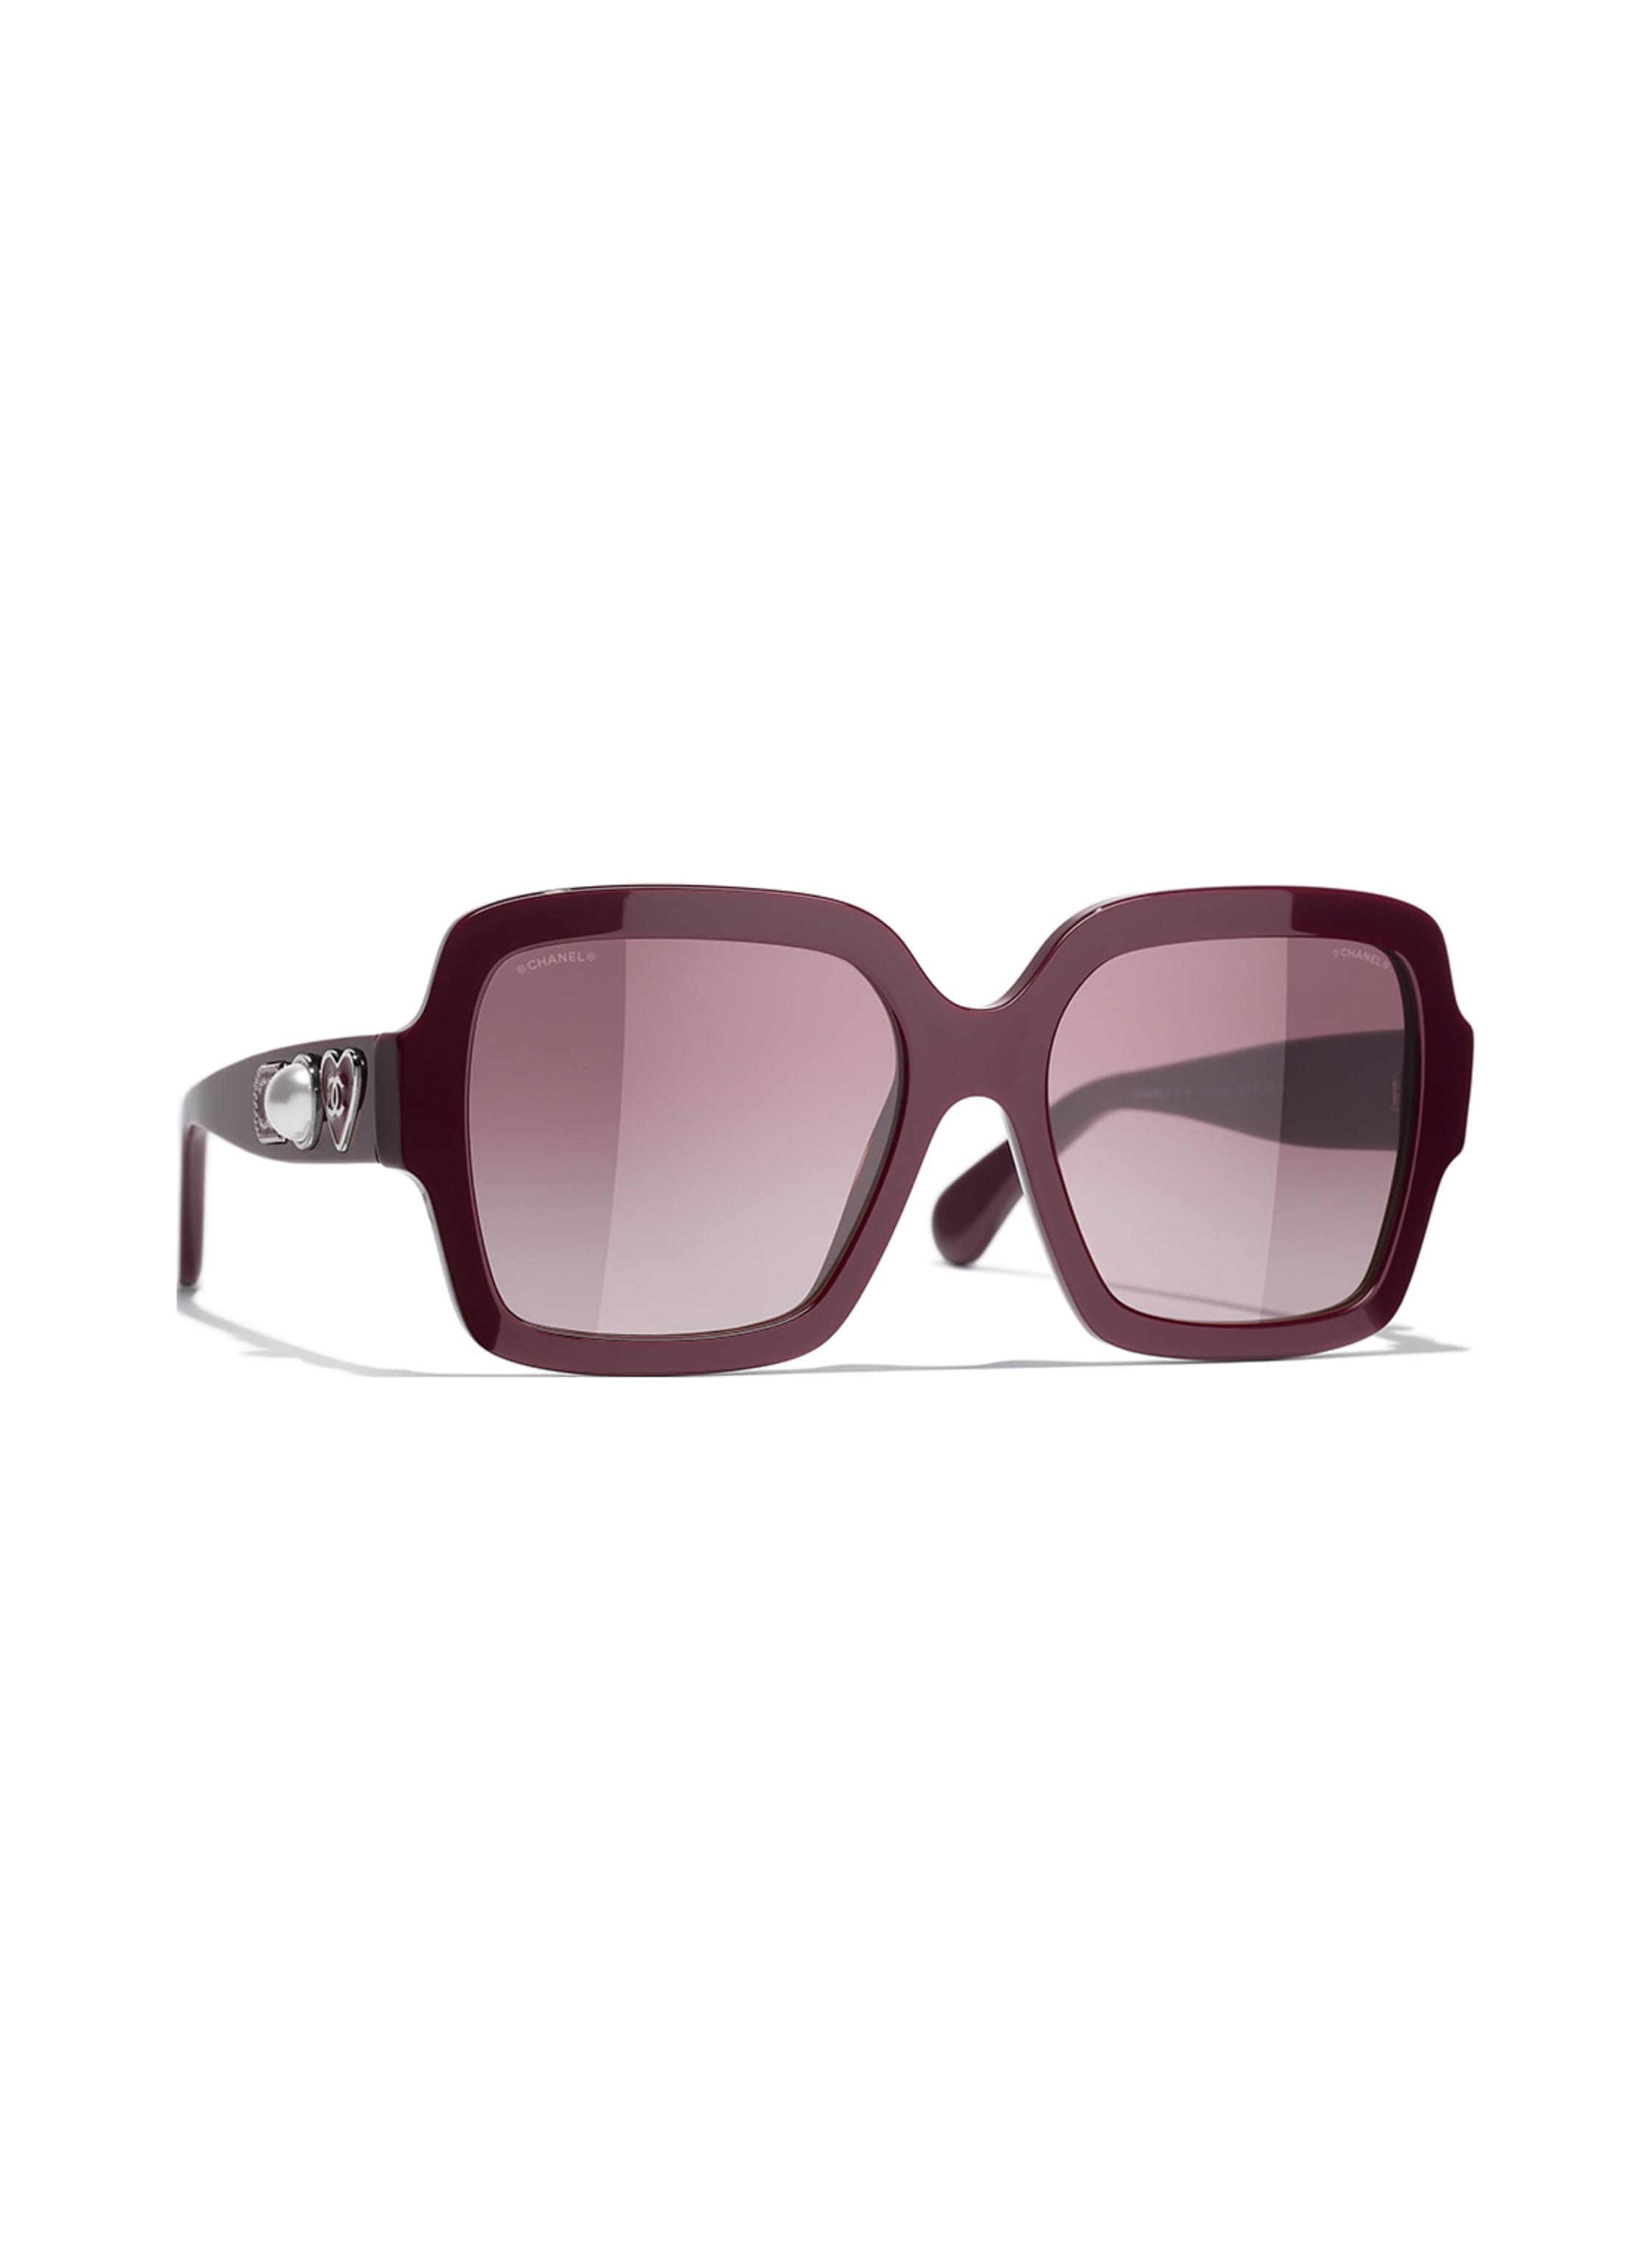 Chanel  Oval Sunglasses  Dark Red  Chanel Eyewear  Avvenice